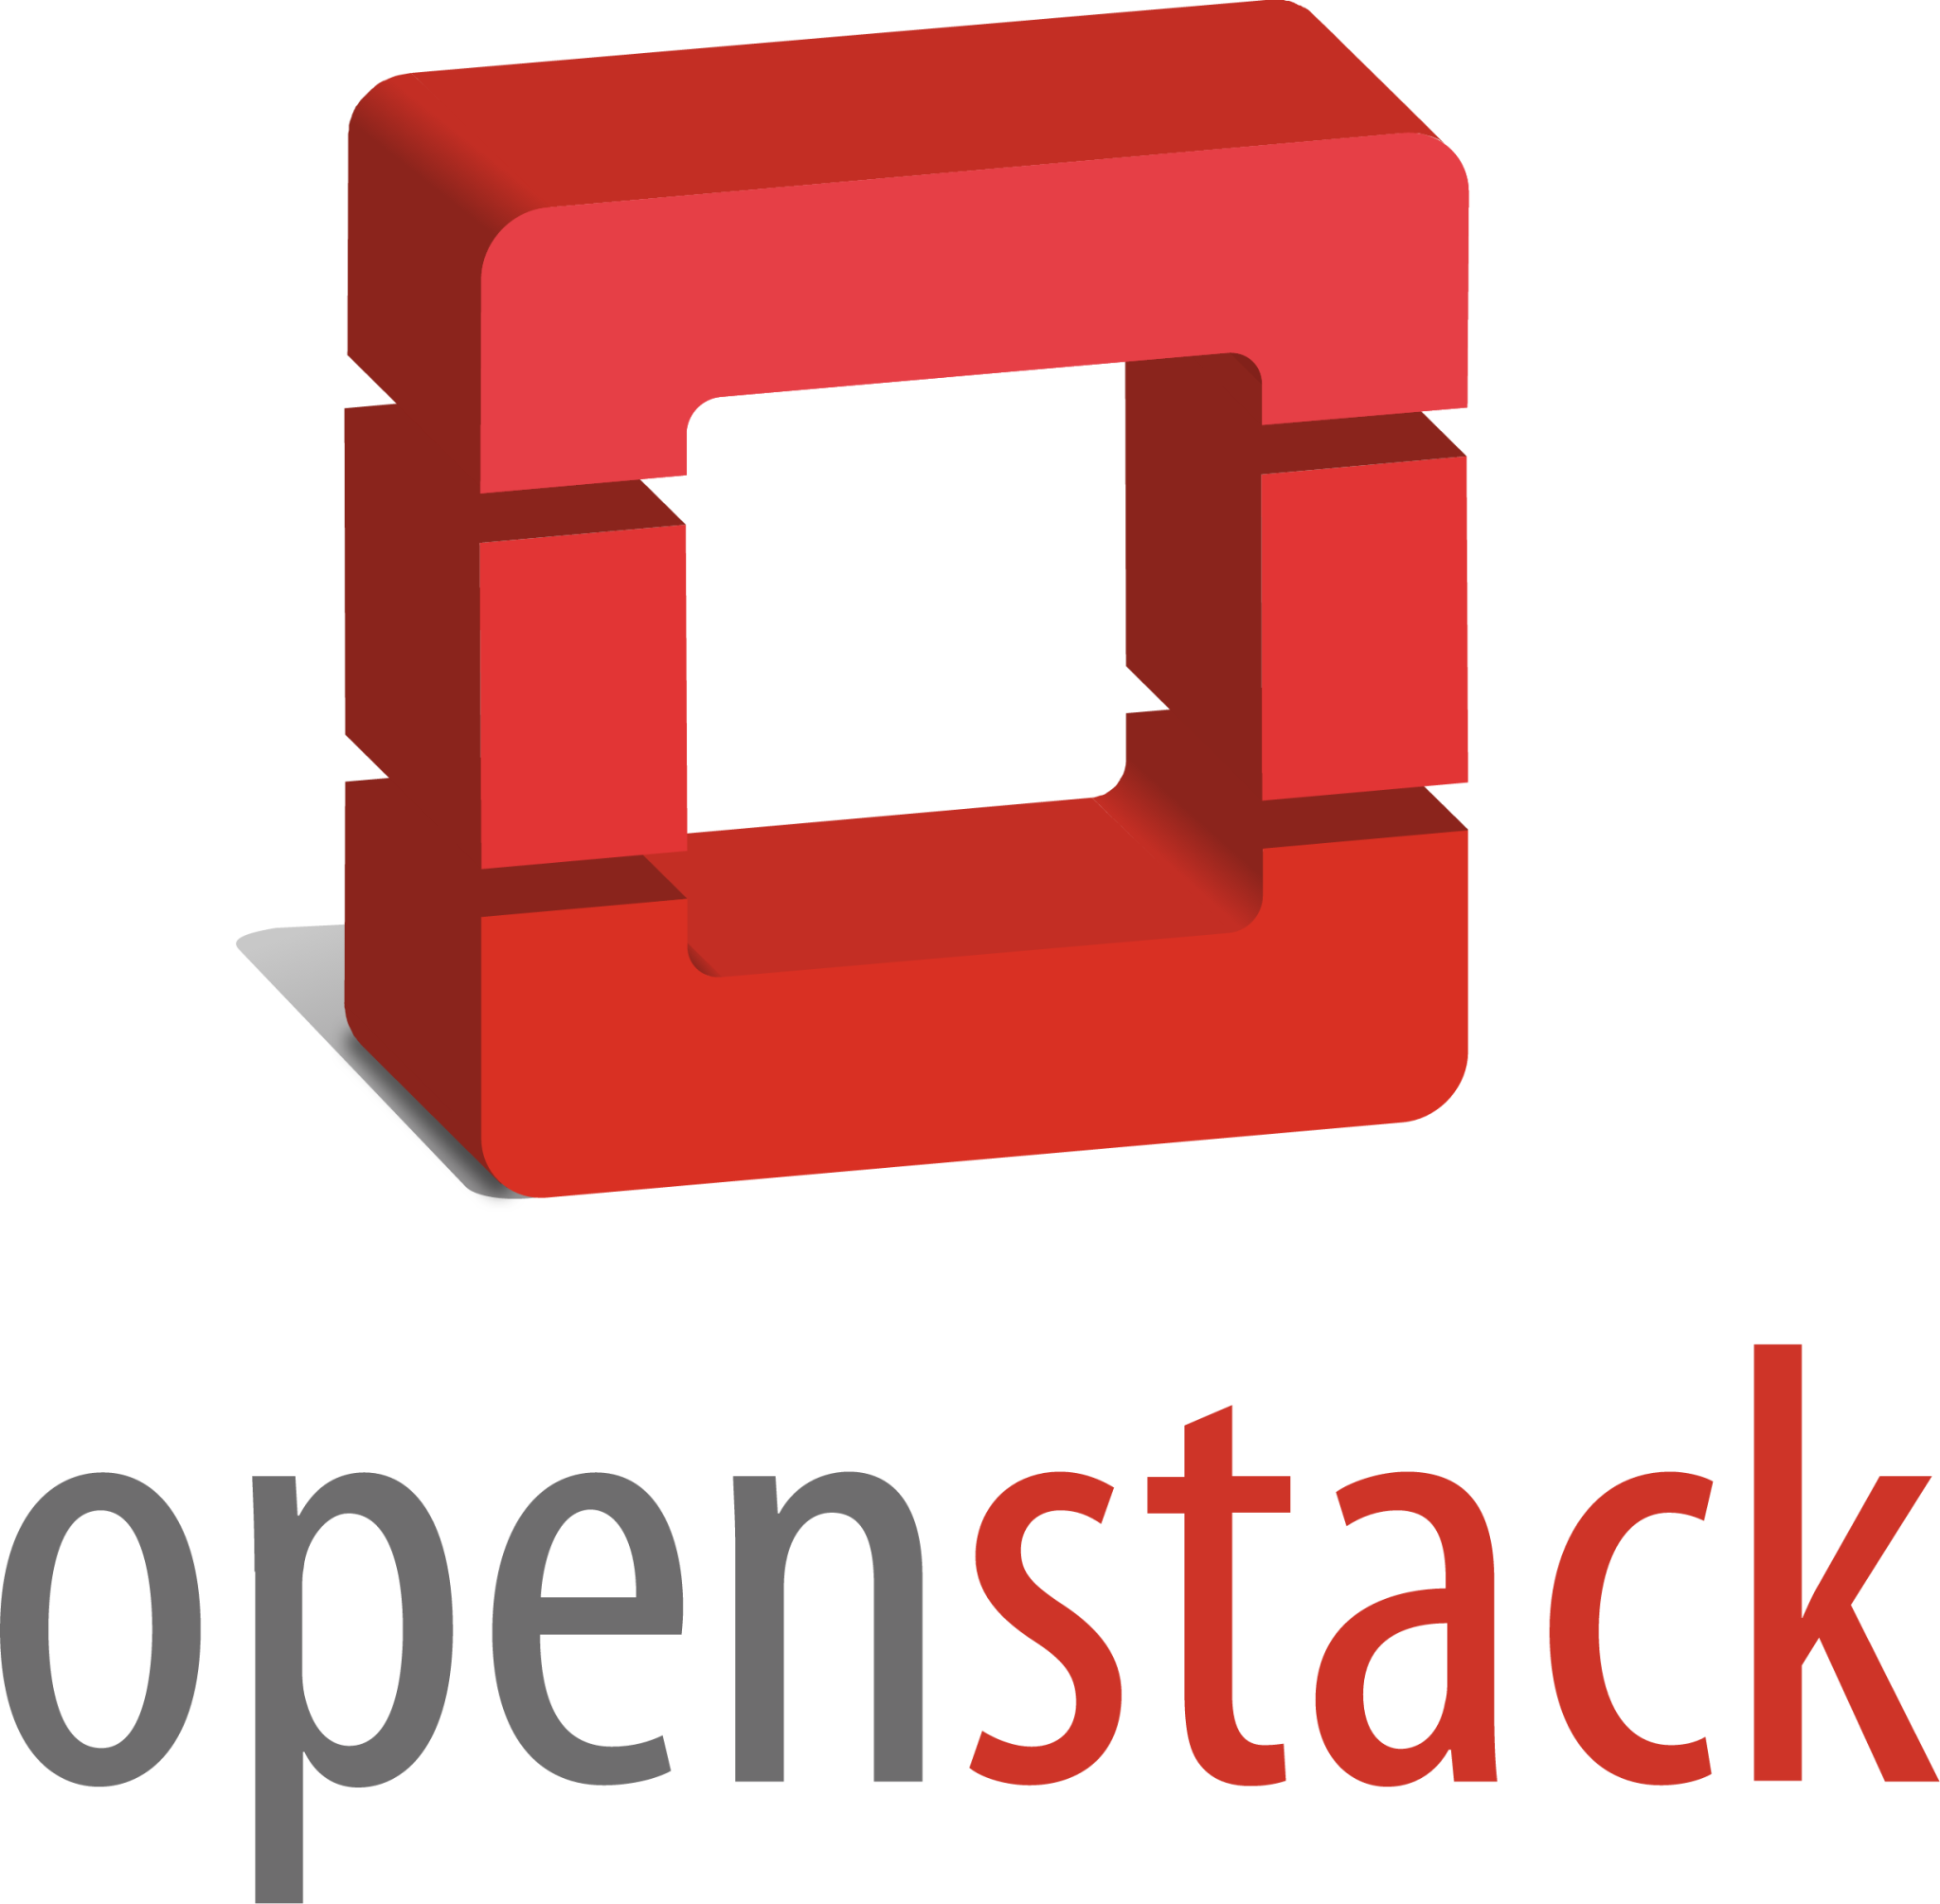 openstack icon